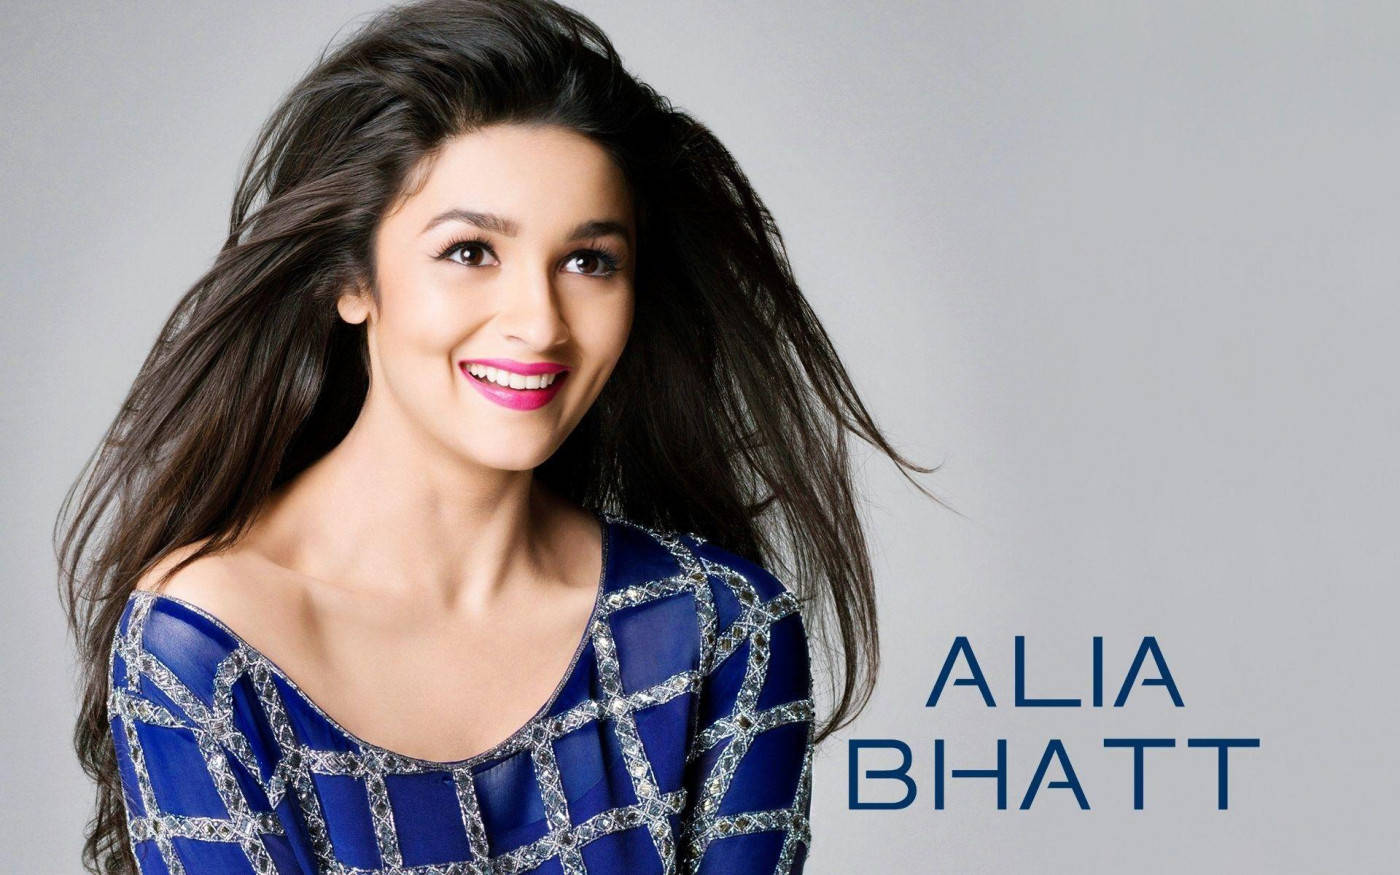 Free Alia Bhatt Wallpaper Downloads, [100+] Alia Bhatt Wallpapers for FREE  